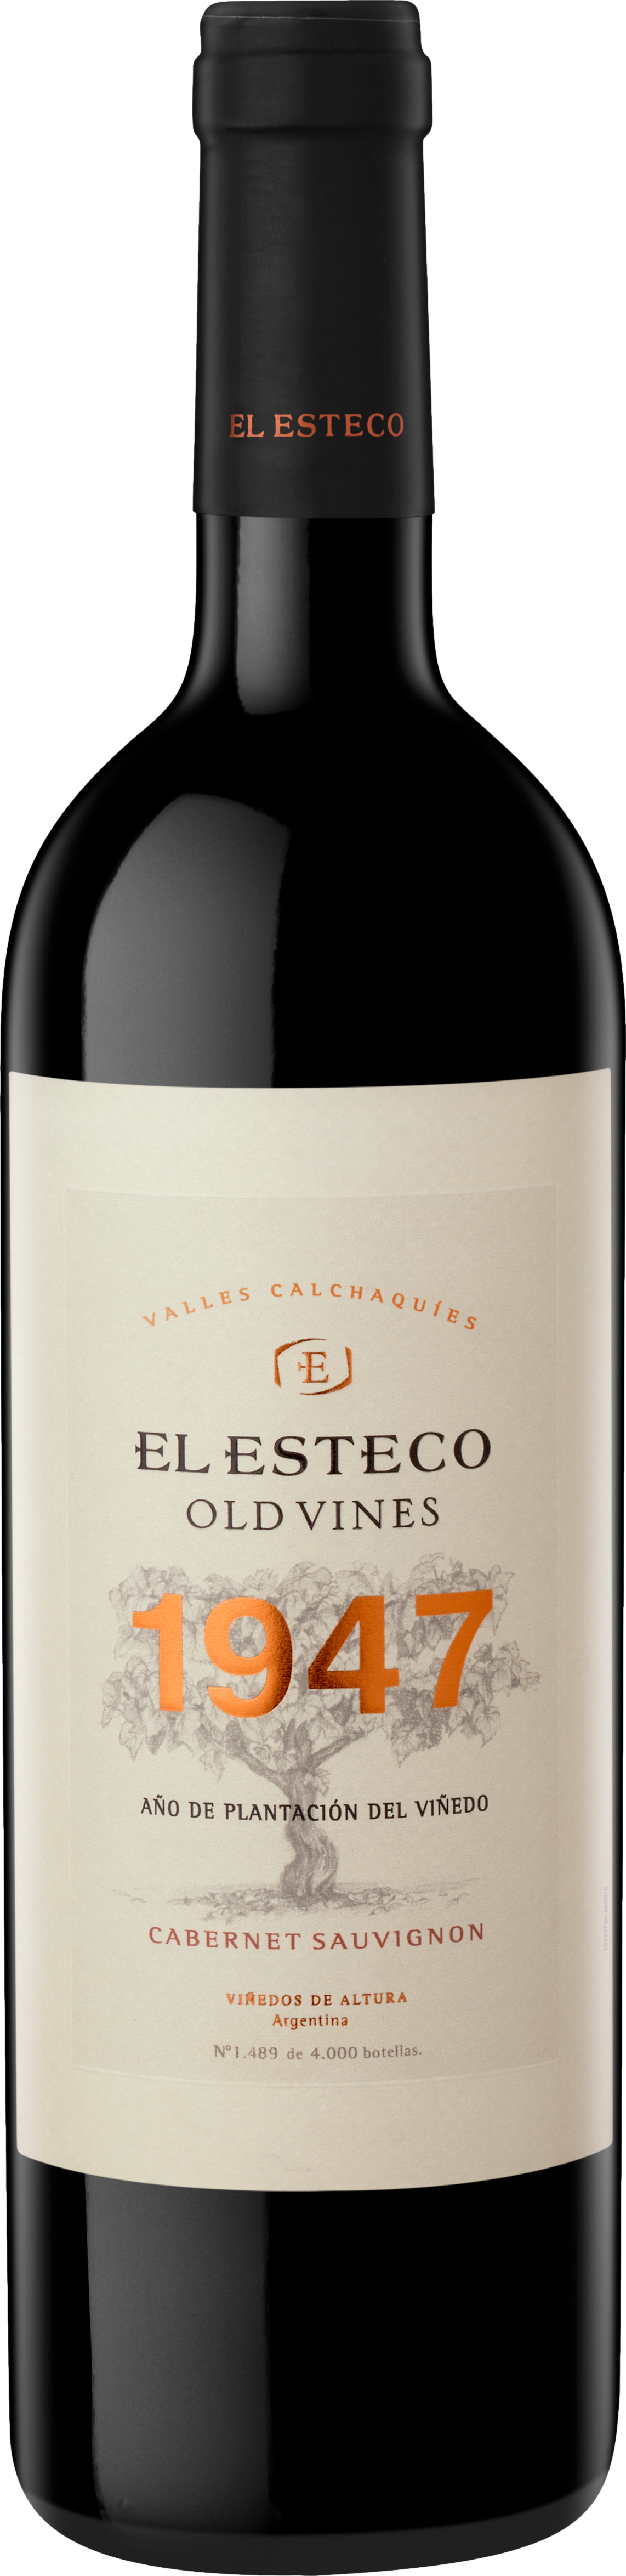 El Esteco Old Vines Cabernet Sauvignon 2019